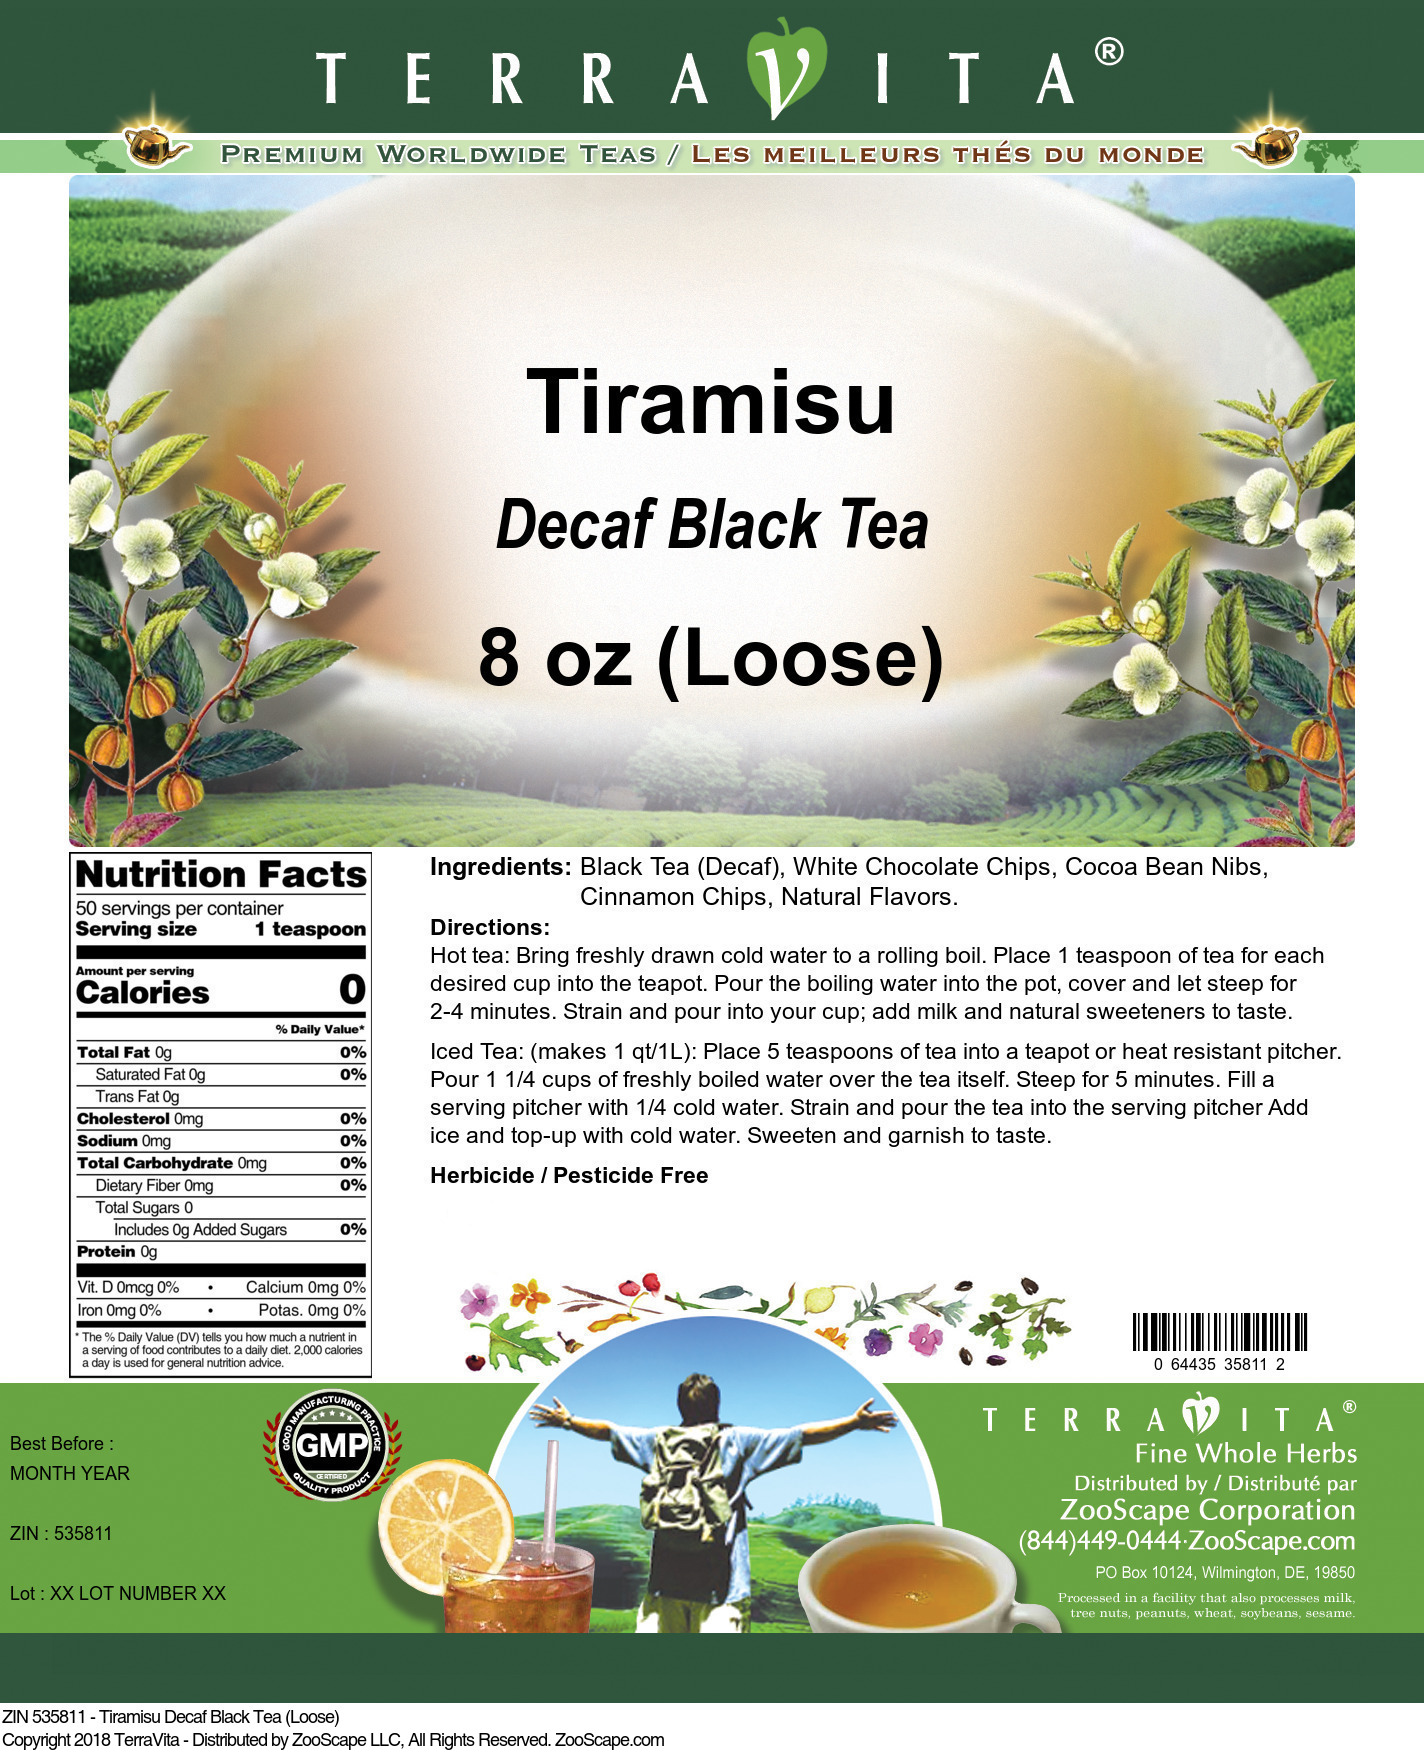 Tiramisu Decaf Black Tea (Loose) - Label